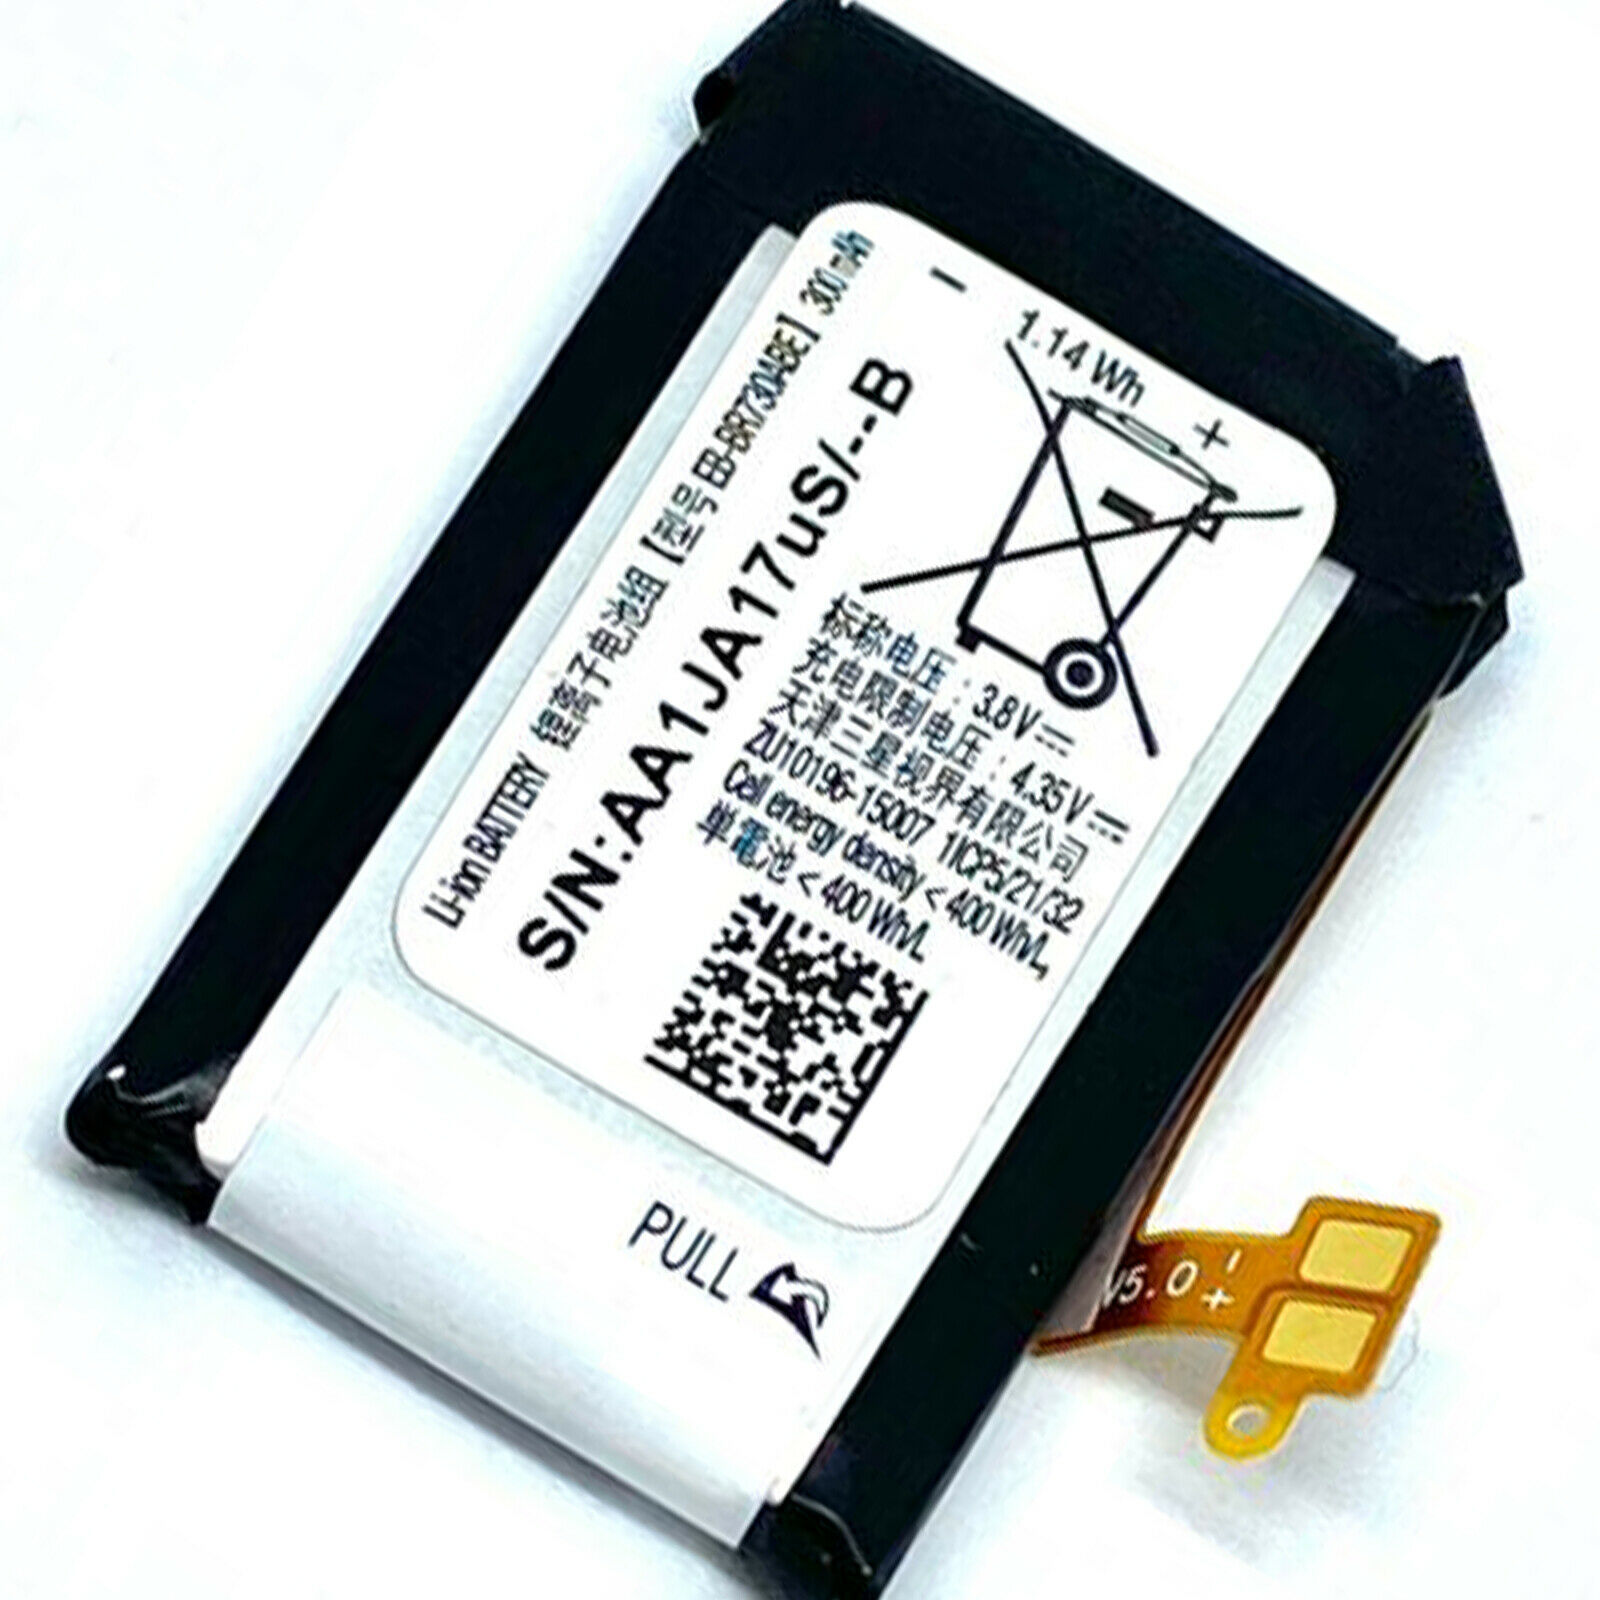 SAMSUNG EB-BR730ABE FOR GEAR SPORT SM-R600 GEAR S2 SM-R730A/R735A 300mAh kompatibelt batterier